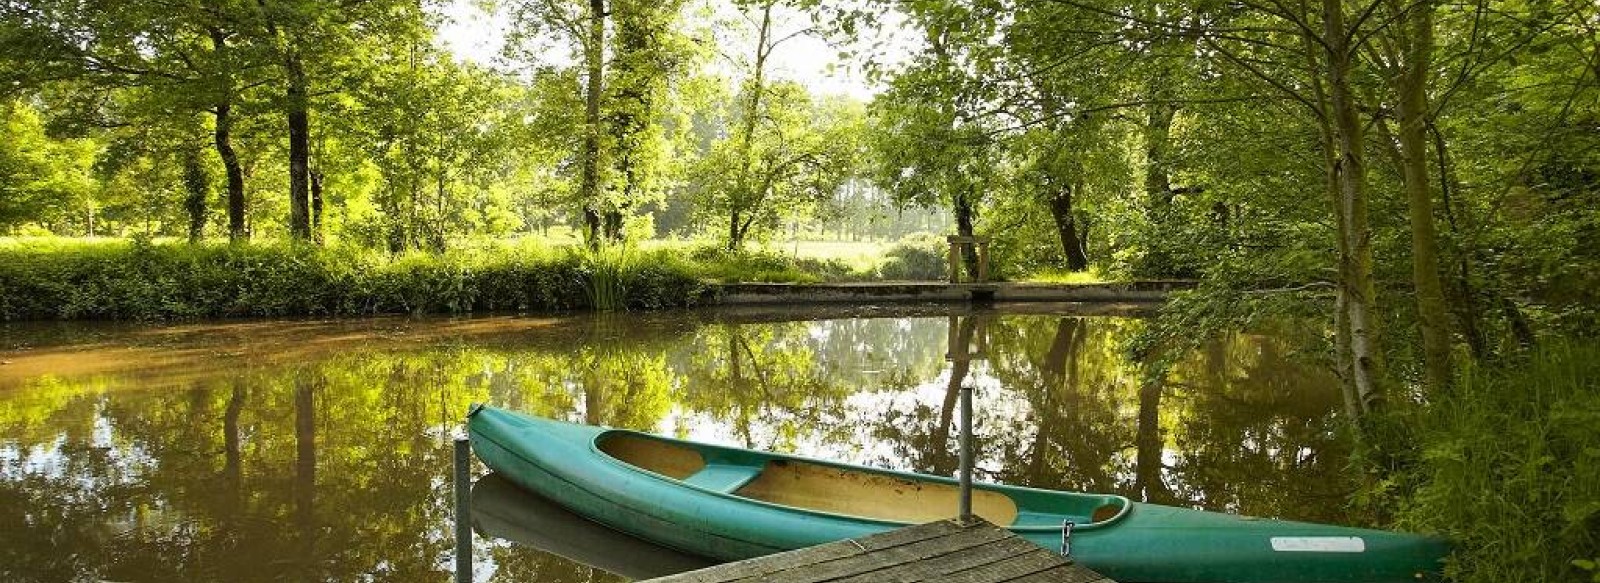 Canoe a Rambourg